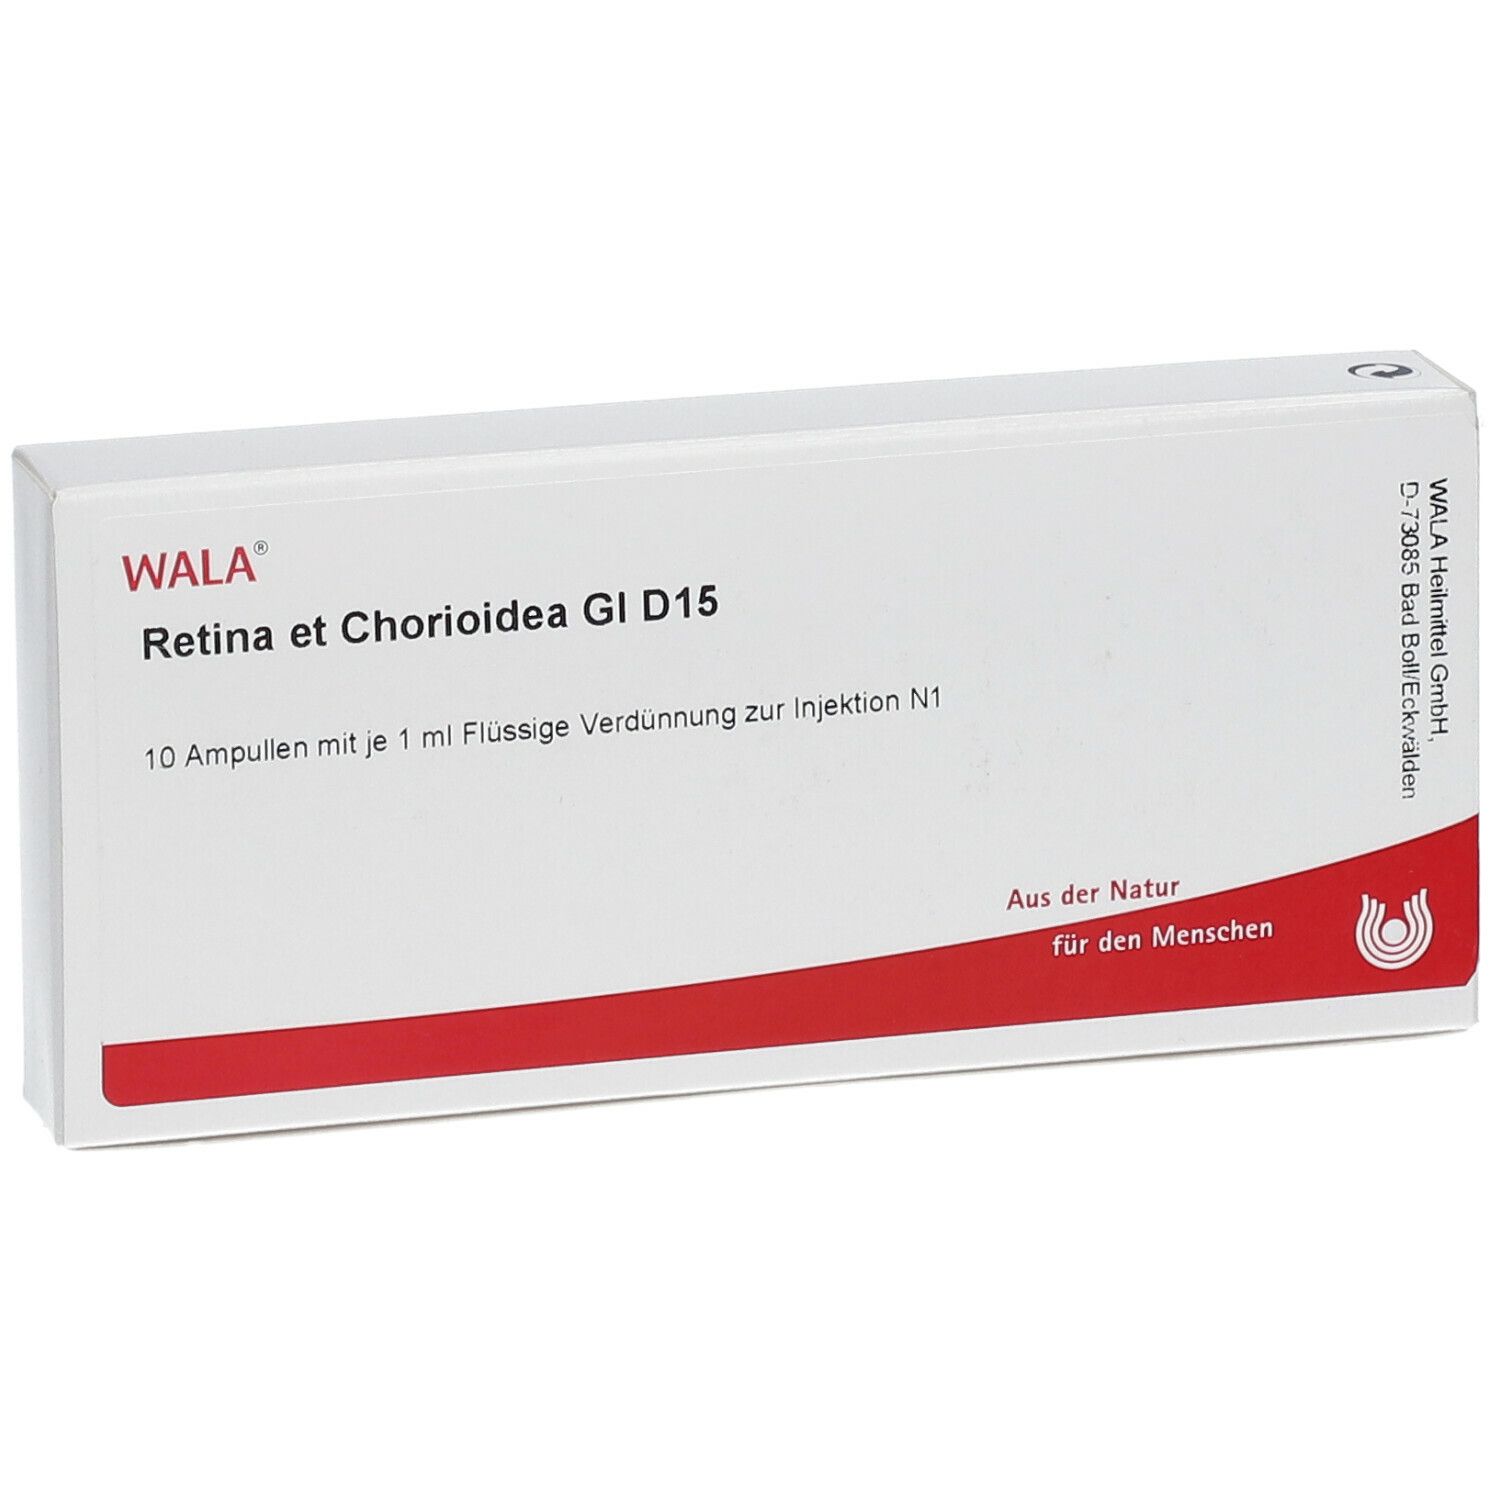 WALA® Retina et Chorioidea Gl D 15